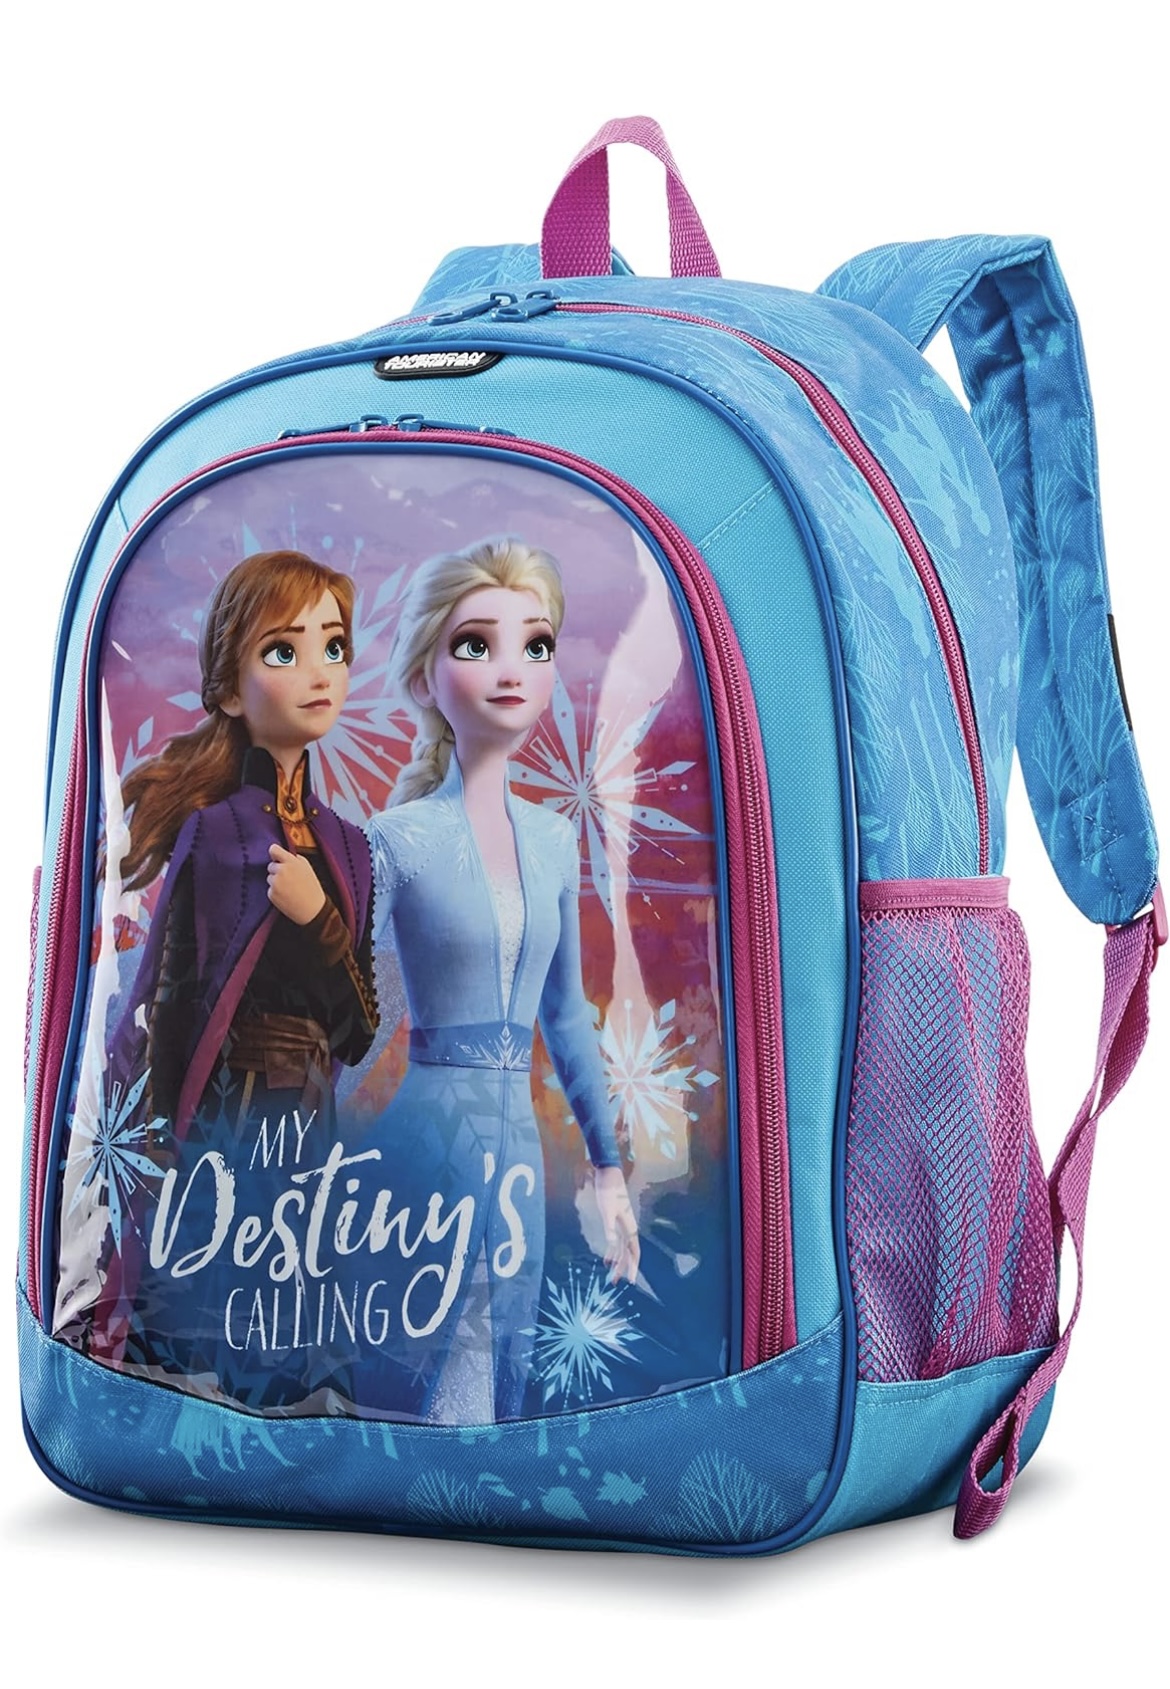 American Tourister Bag for Kids Frozen